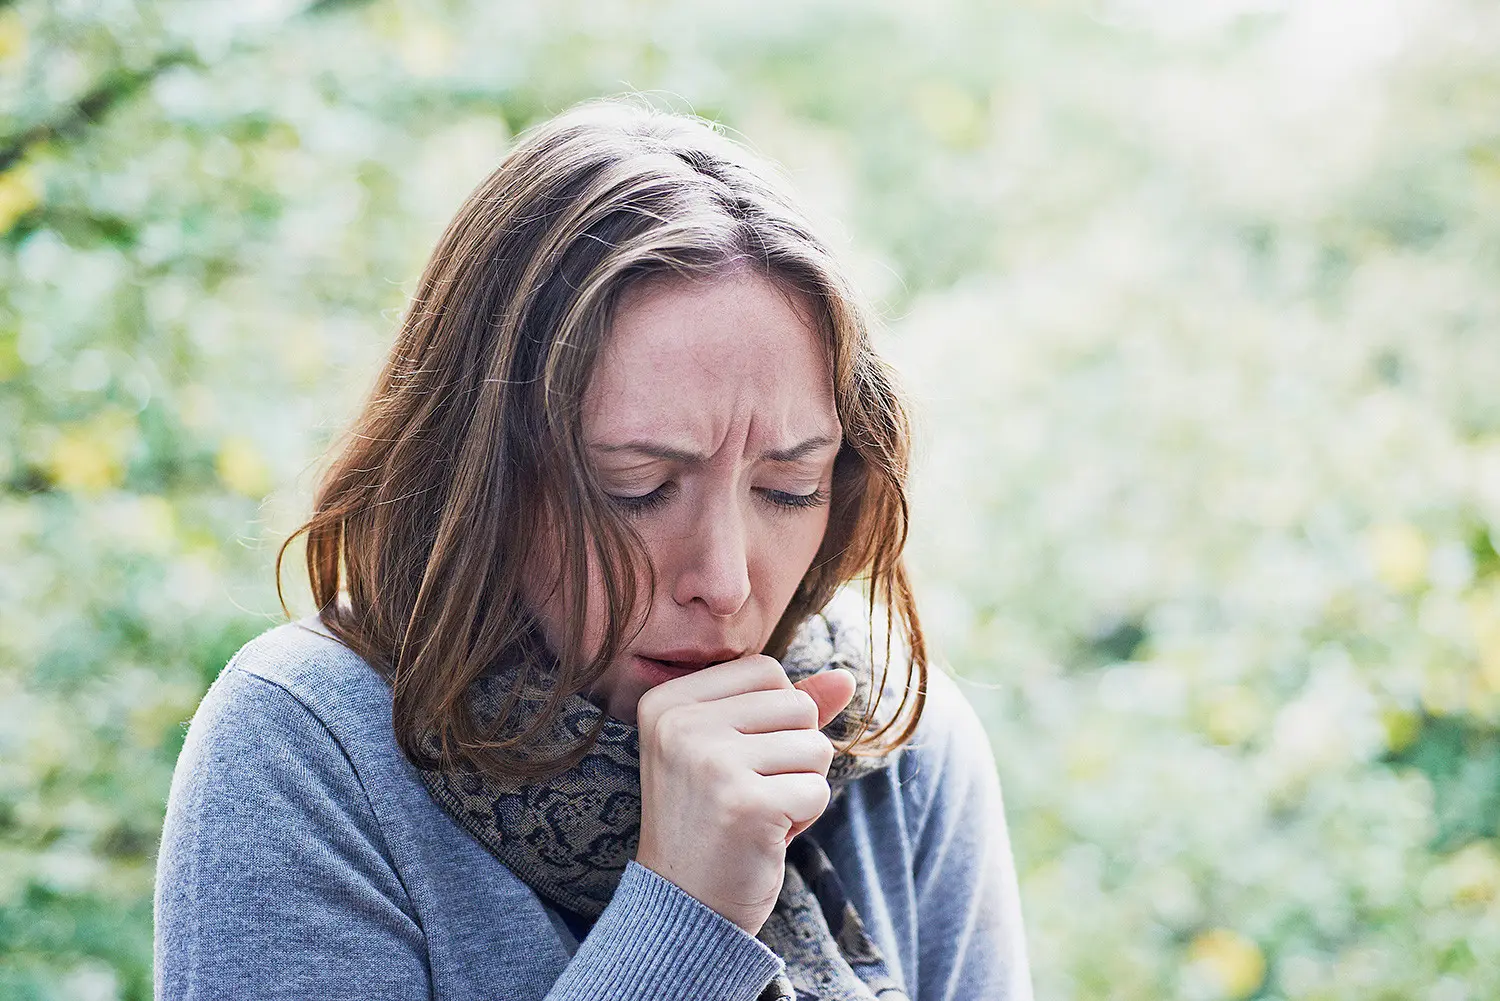 Batuk kamu nggak sembuh-sembuh? Awas kena batuk 100 hari. (Sumber Foto: thesun.co.uk)